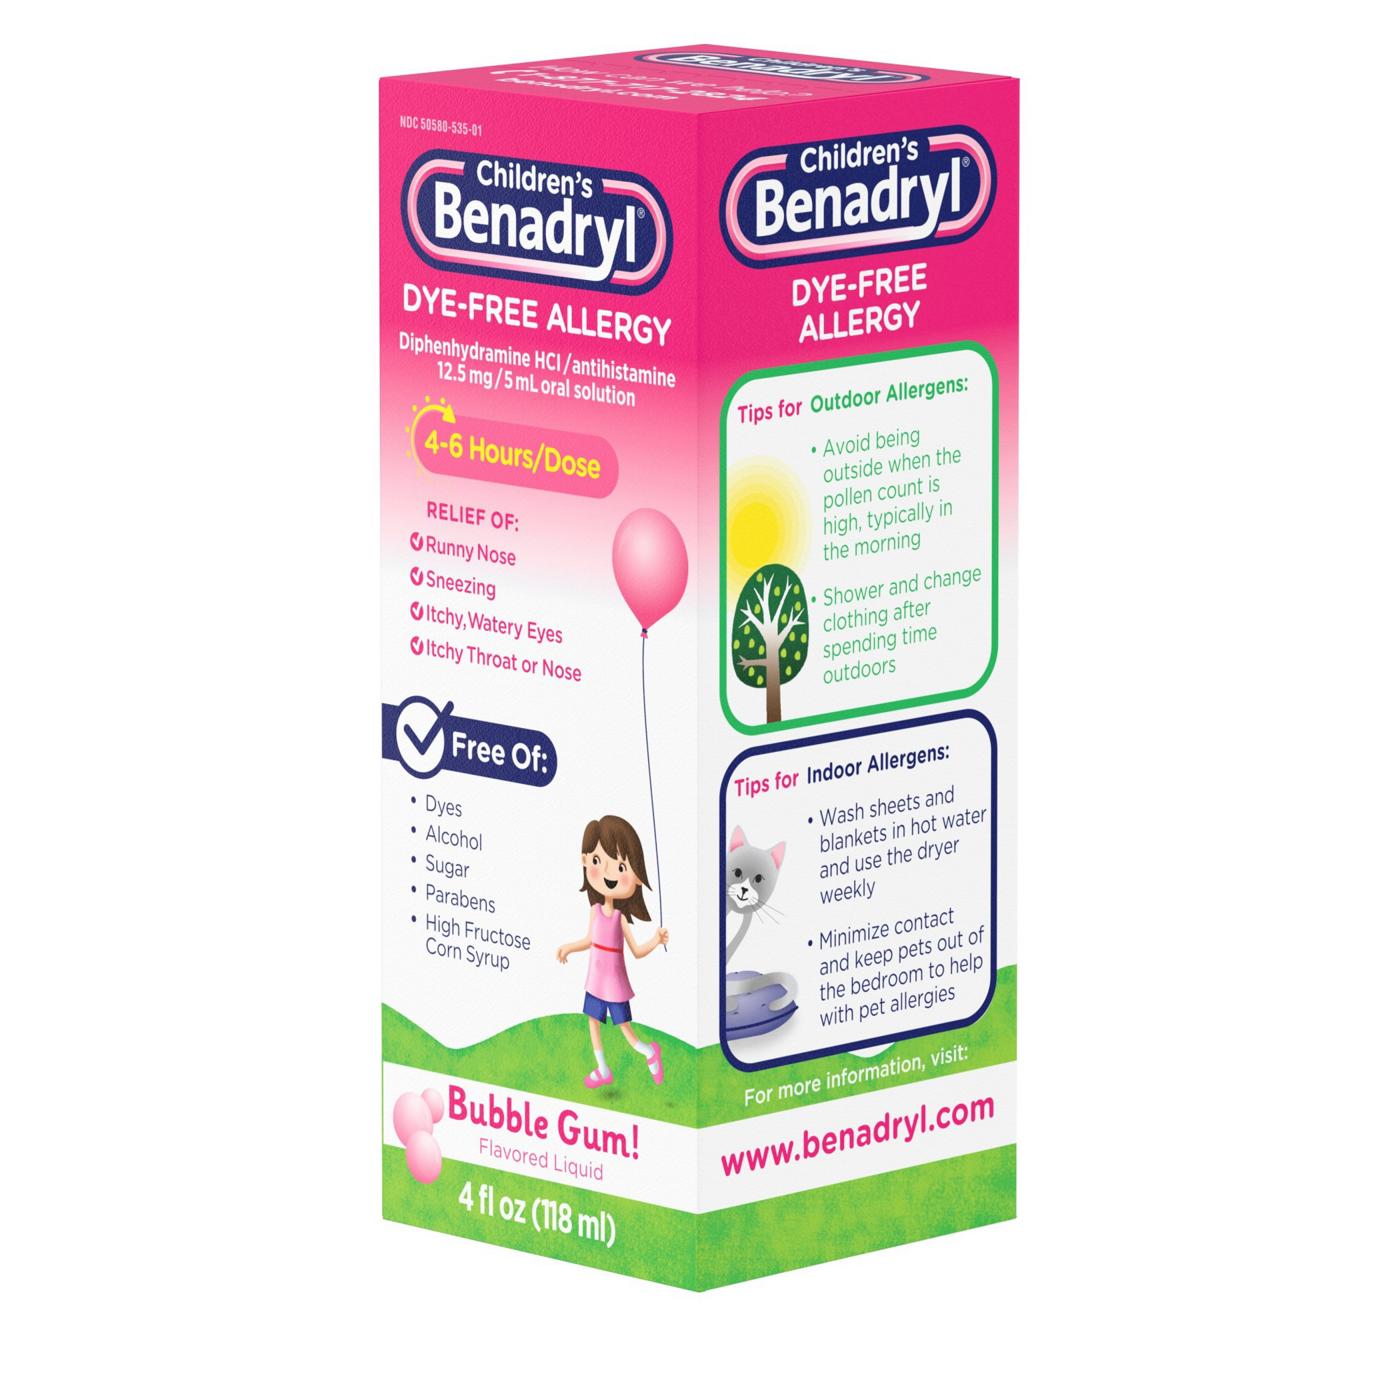 Benadryl Children's Dye-Free Allergy Liquid - Bubble Gum; image 2 of 8